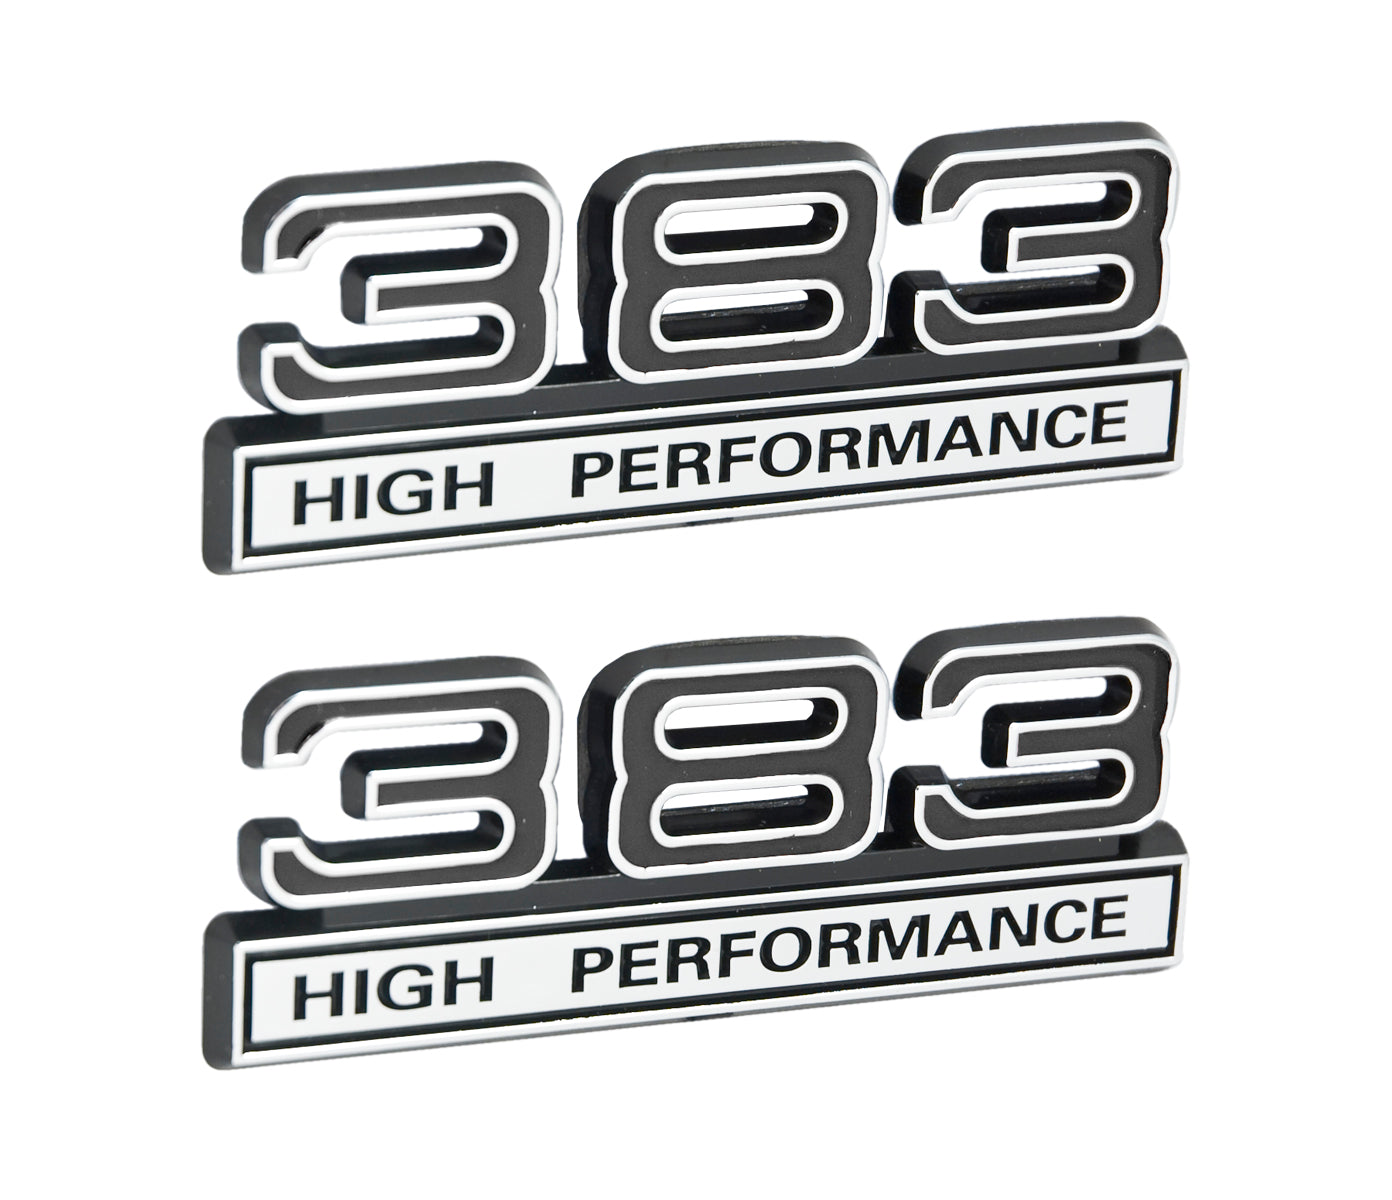 383 High Performance 6.3L Engine Emblems Badges in Chrome & Black - 4" Long Pair